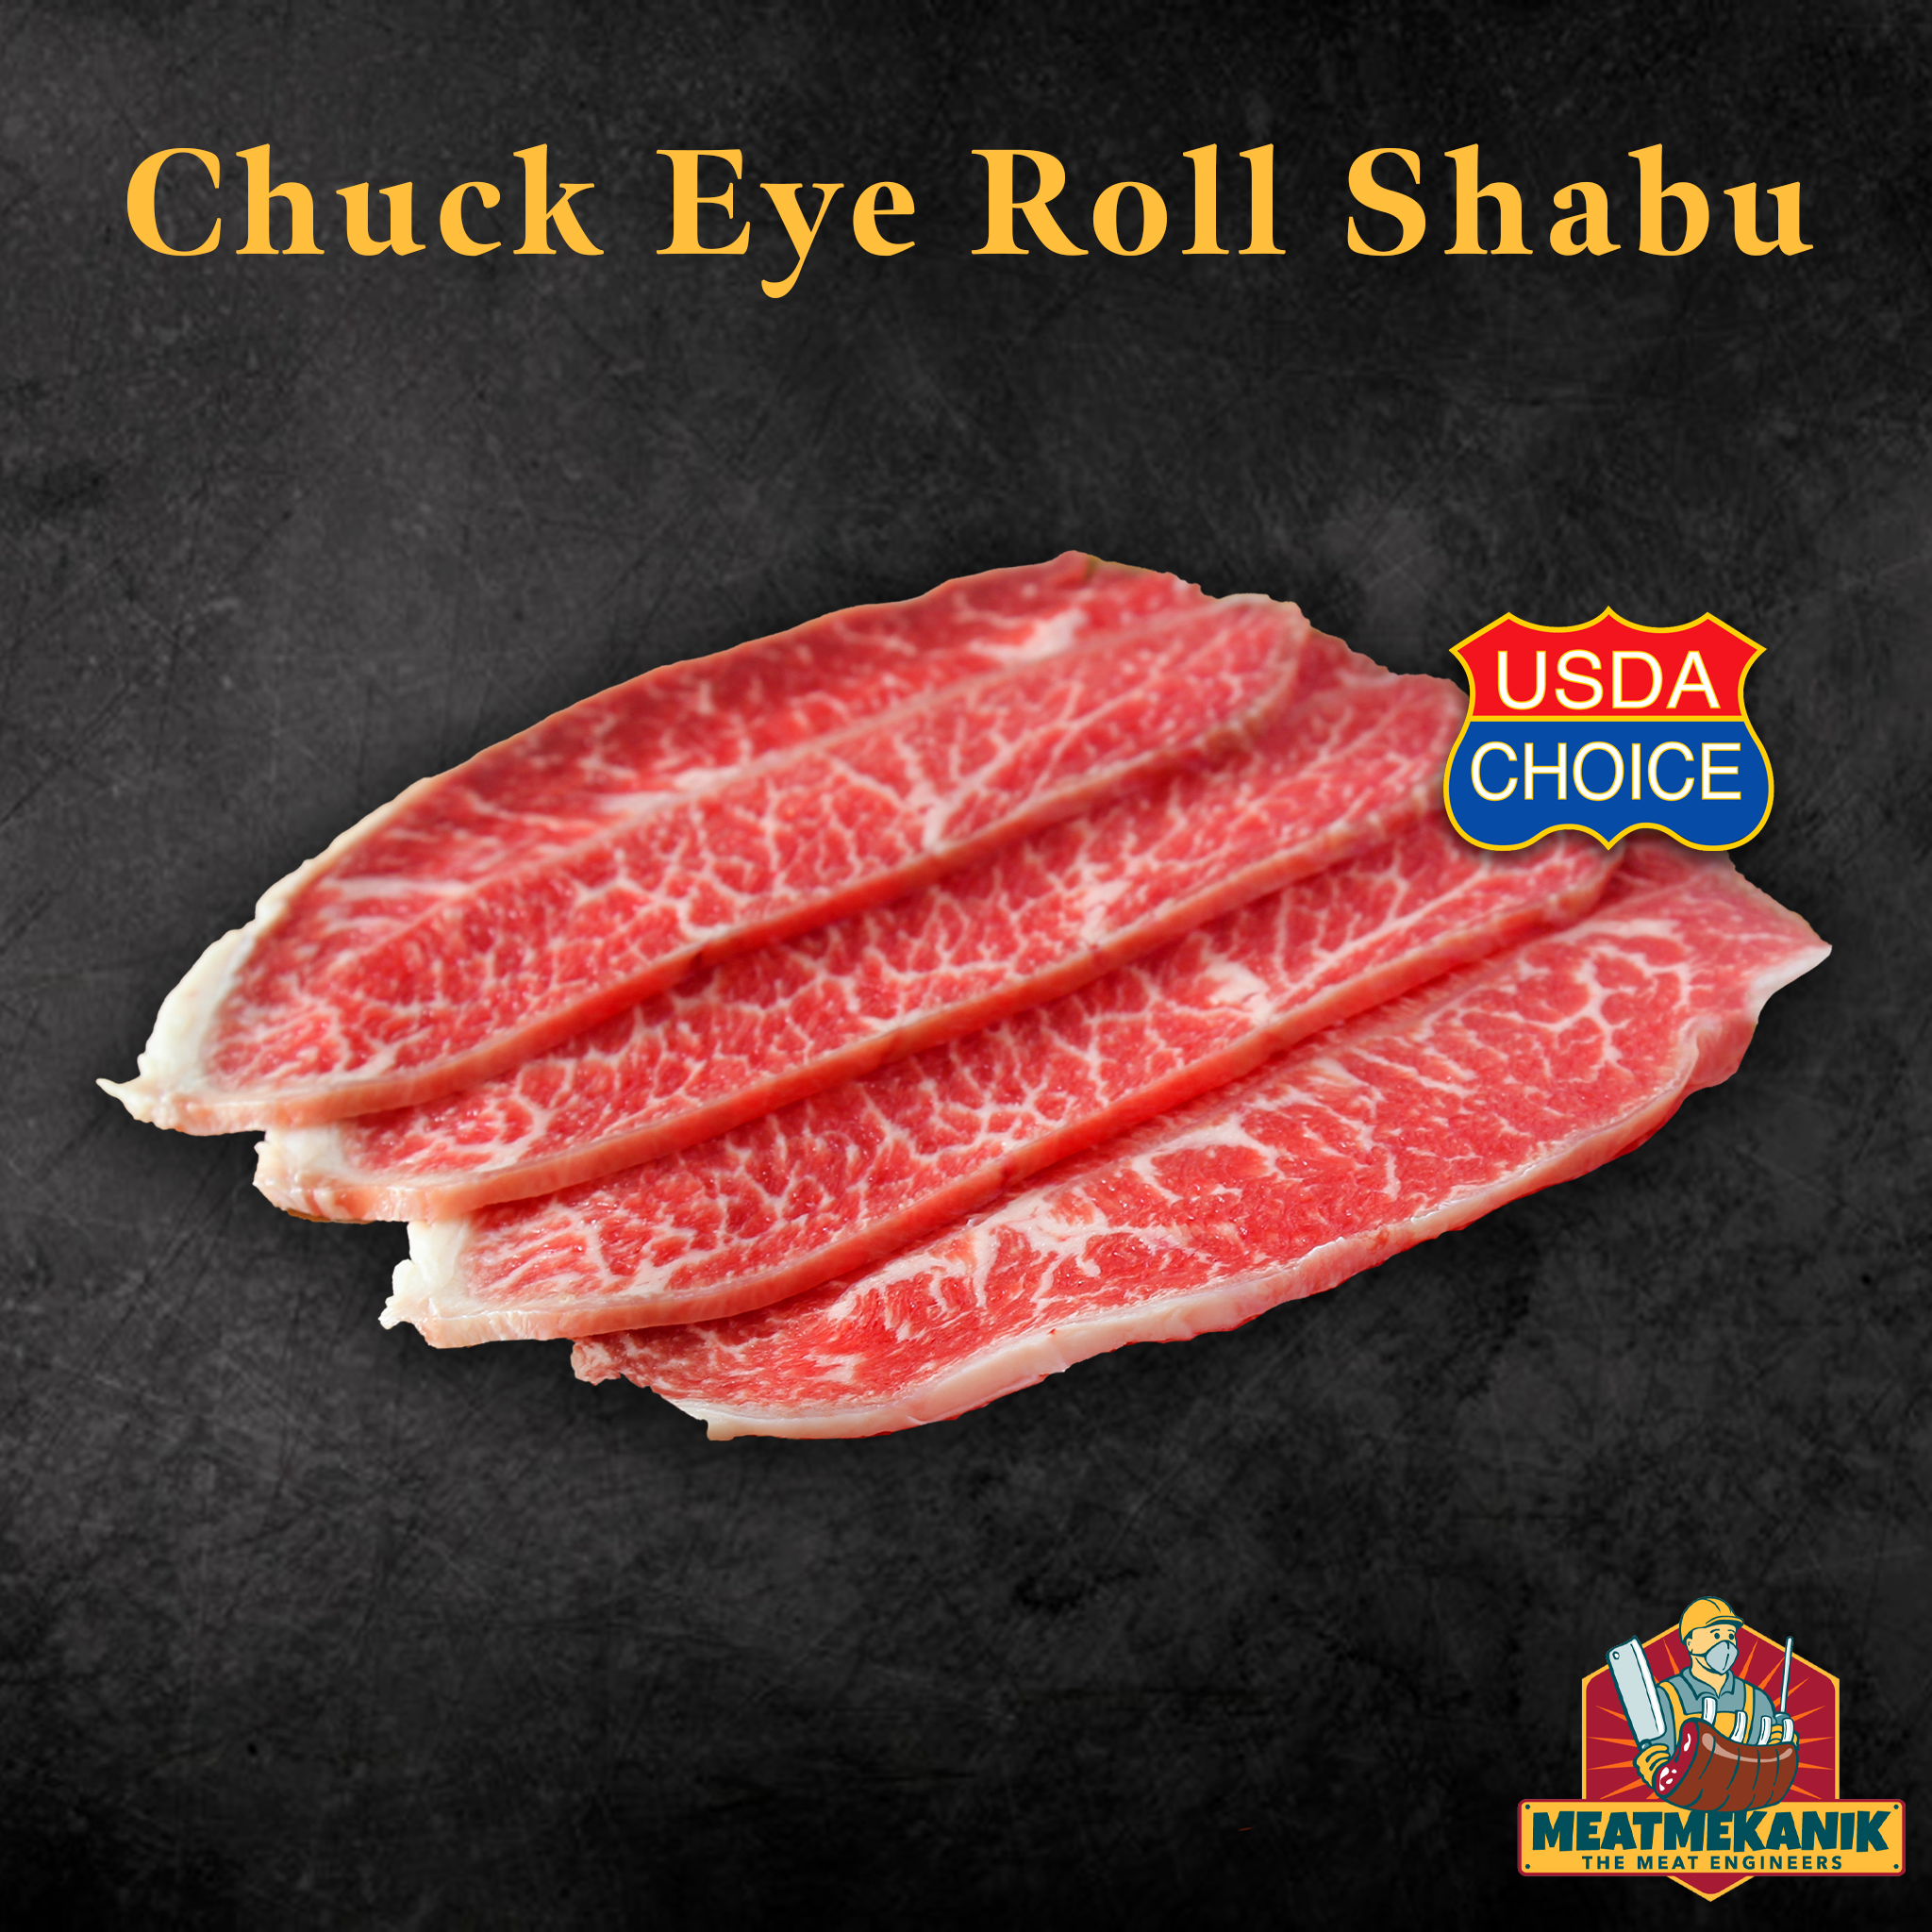 USDA Chuck Eye Roll Shabu - Meat Mekanik